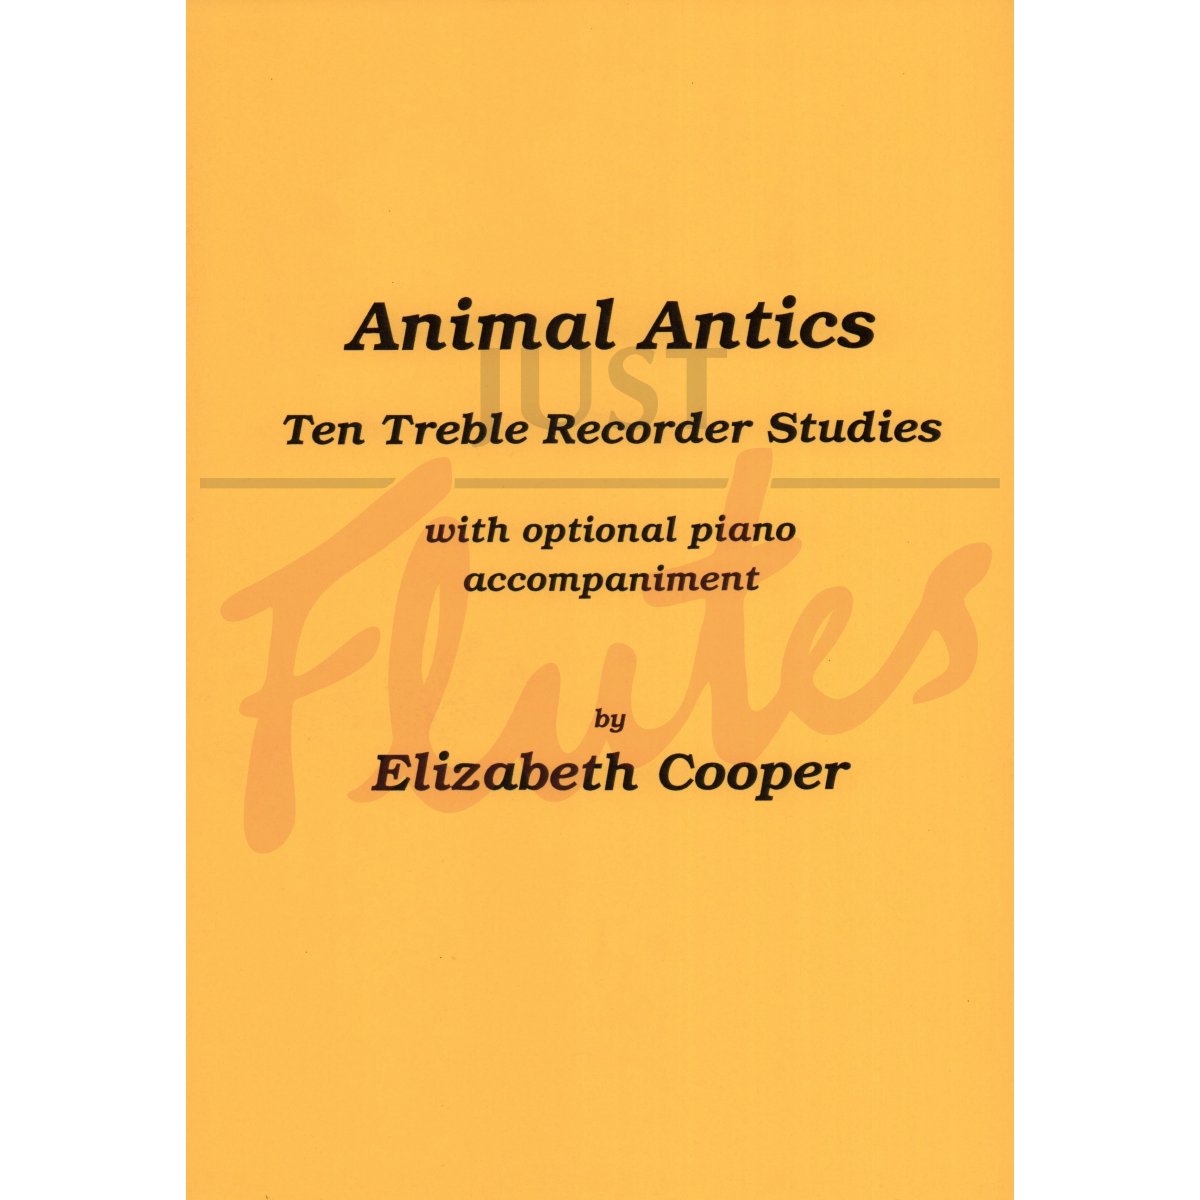 Animal Antics for Treble Recorder with optional Piano accompaniment